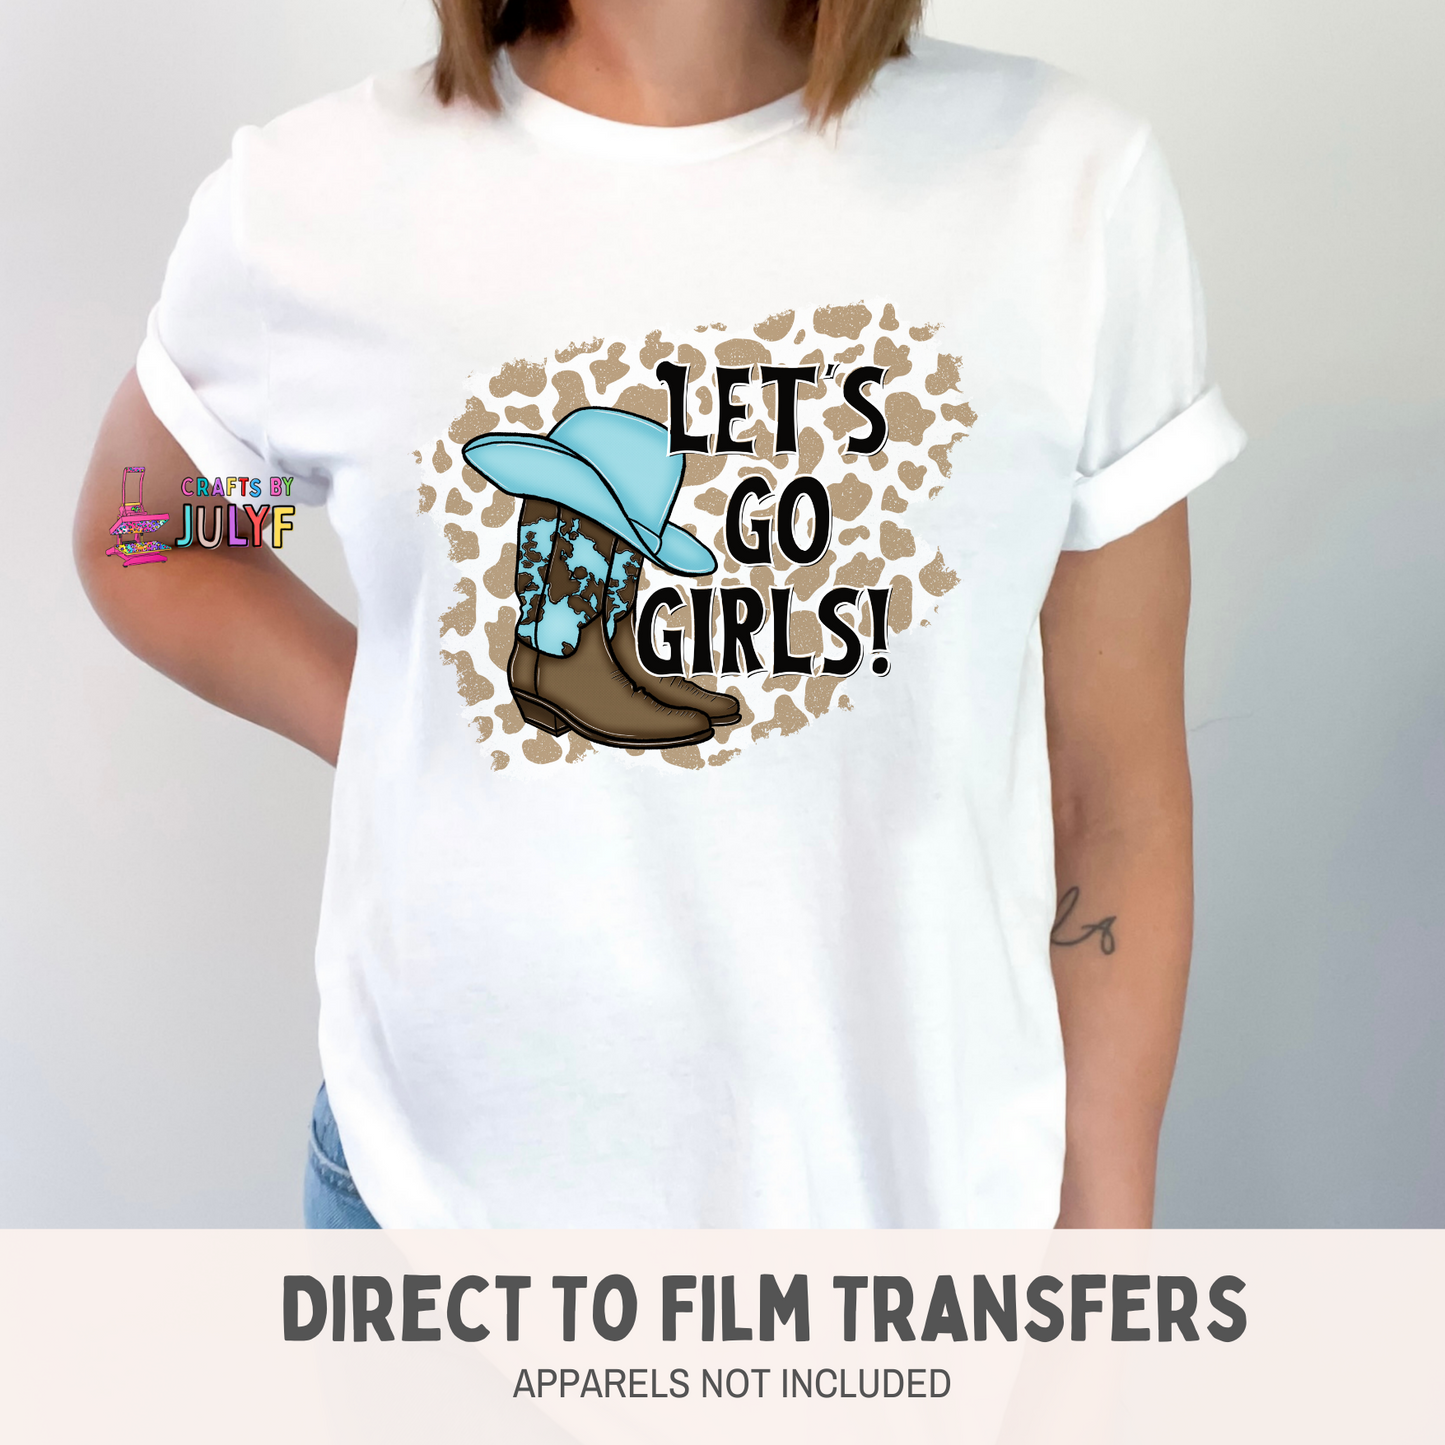 Let's go girls DTF Transfers